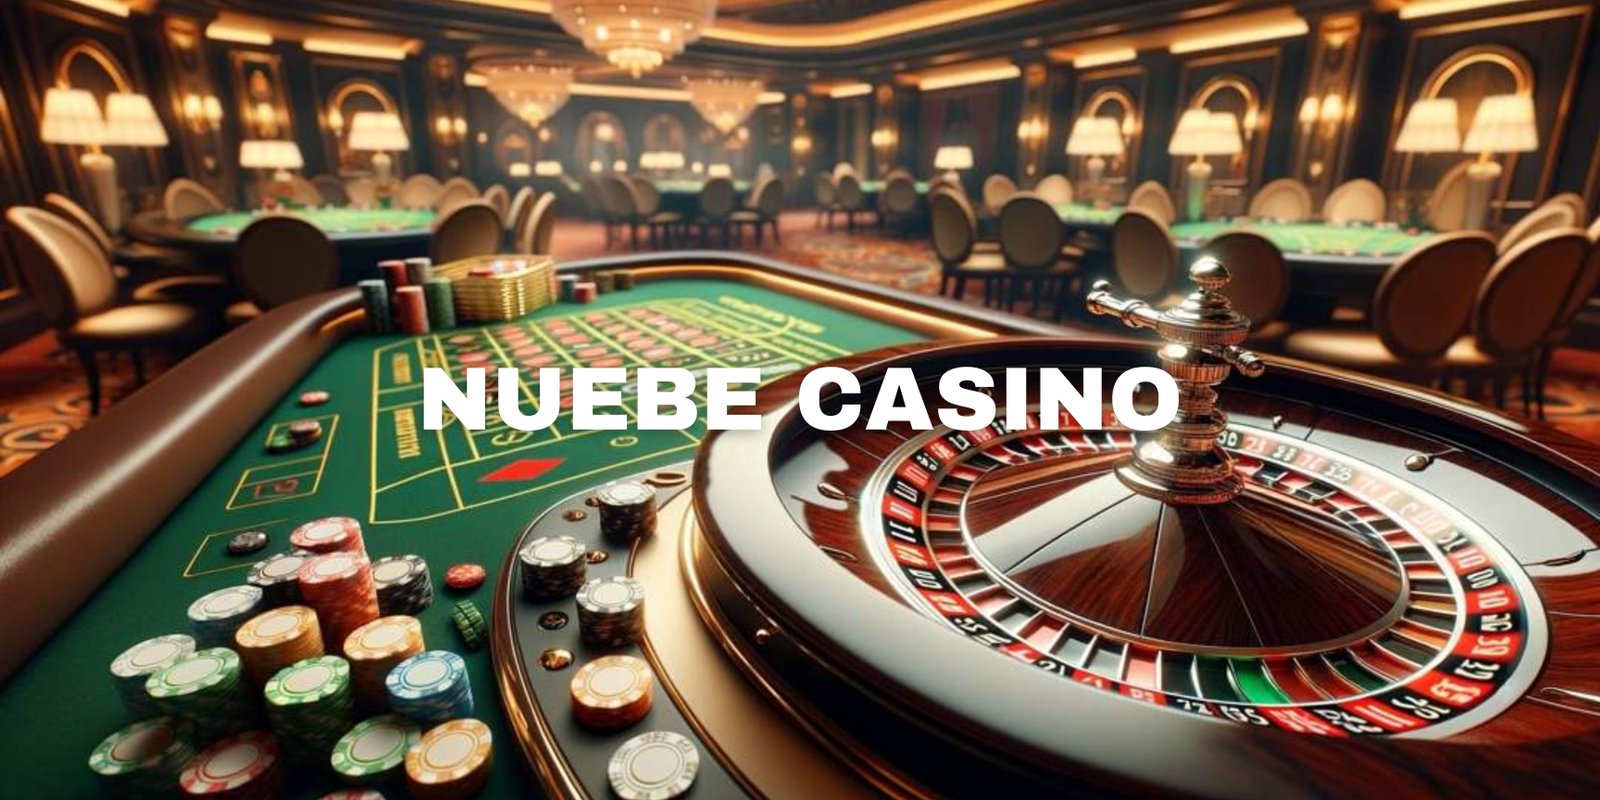 Nuebe Casino